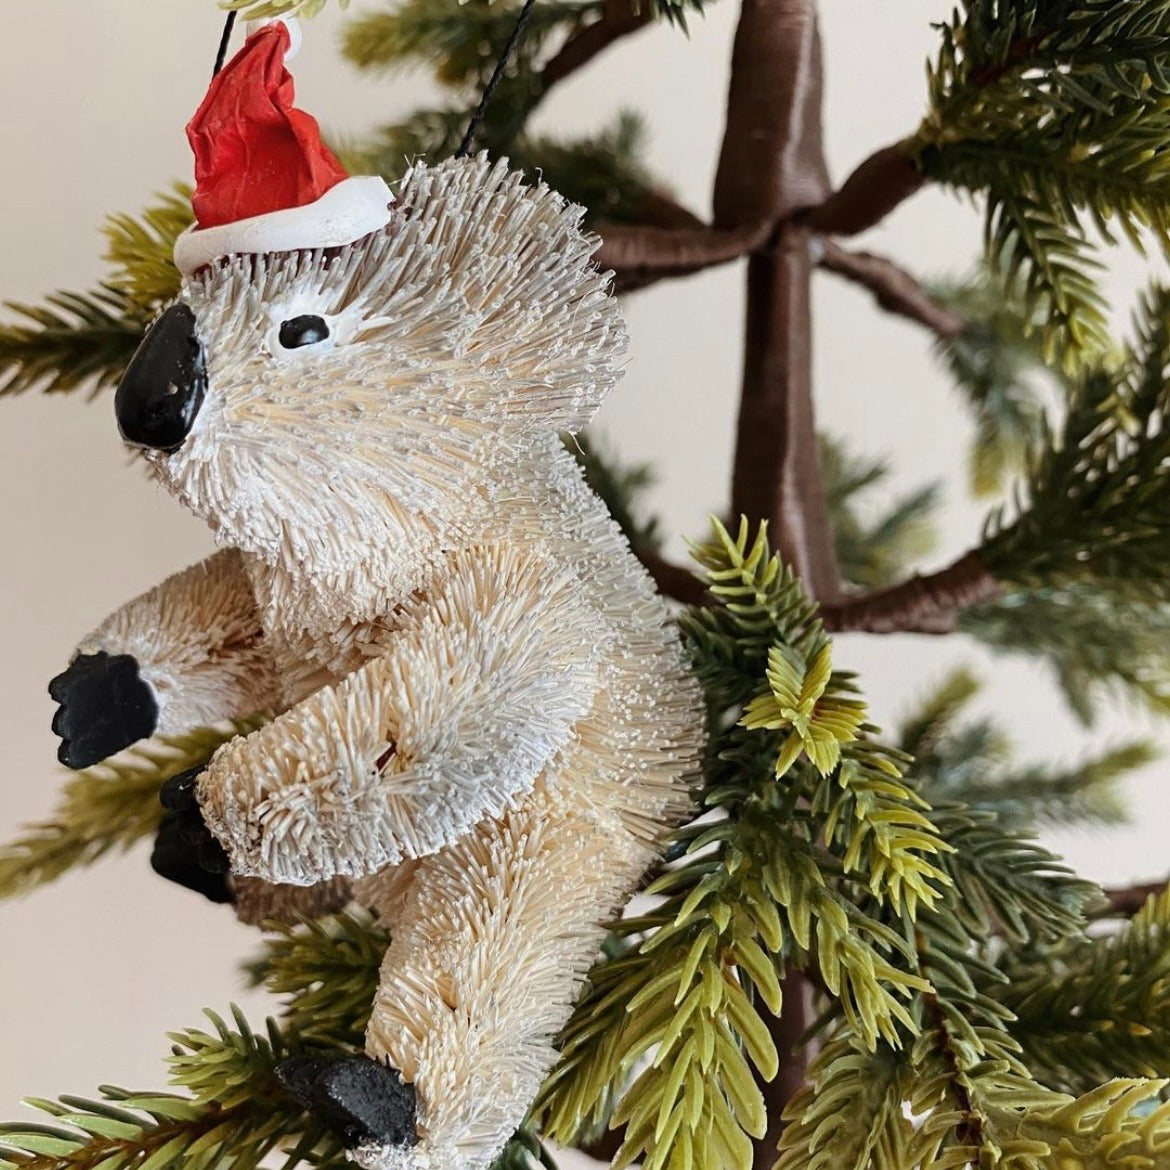 Christmas Tree Ornament Decoration Australian Native - Koala with Santa Hat